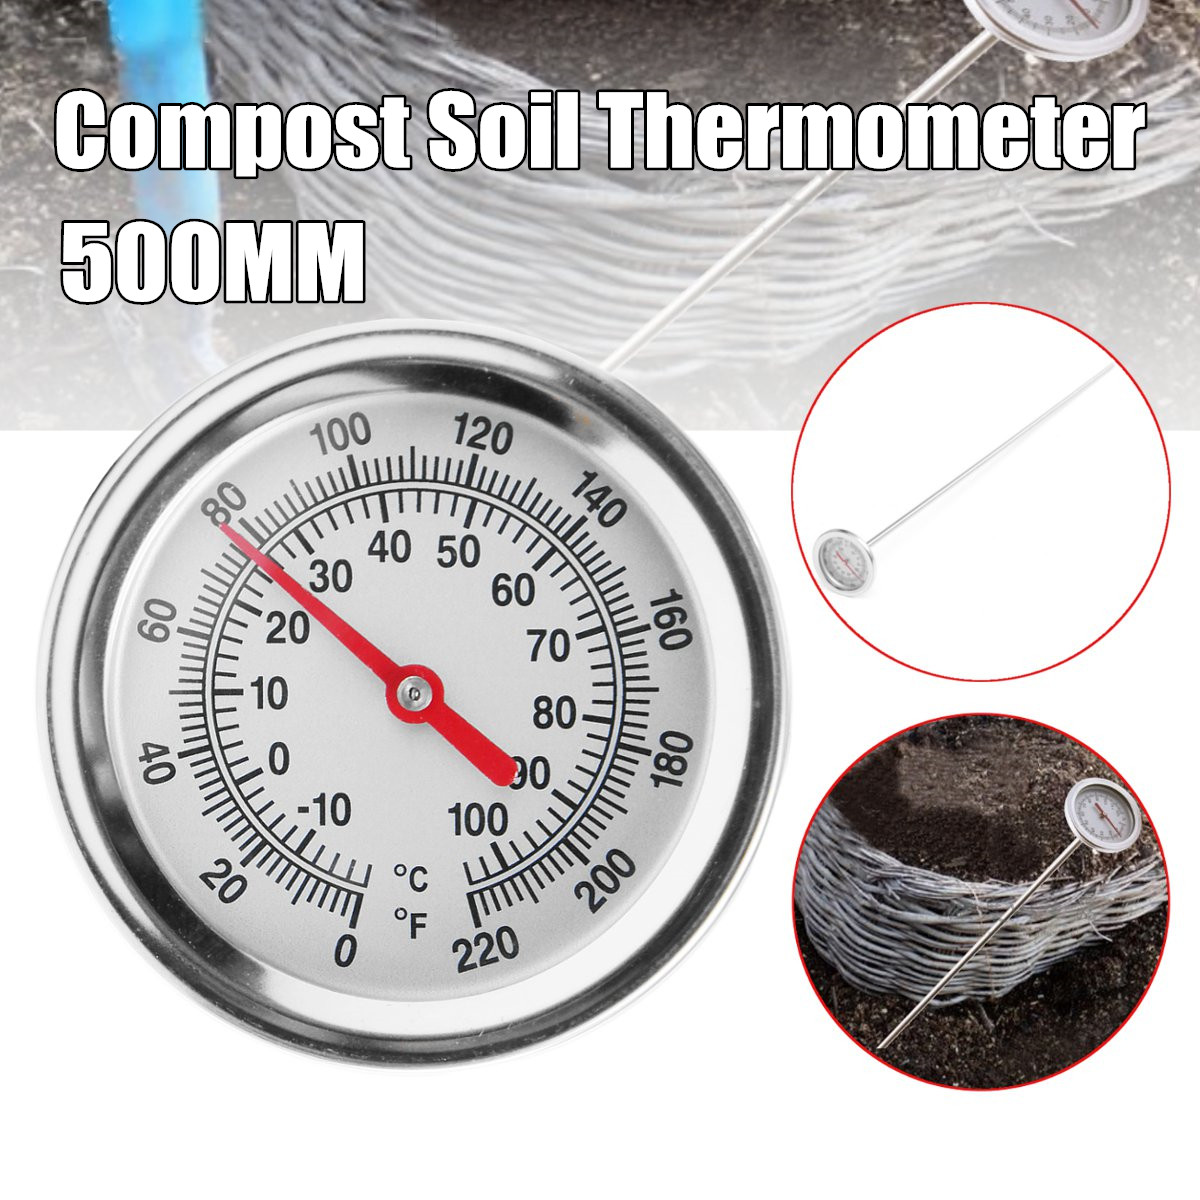 Compost-Soil-Thermometer-Garden-Backyard-Bimetal-Stainless-Steel-Measuring-Probe-1333904-1